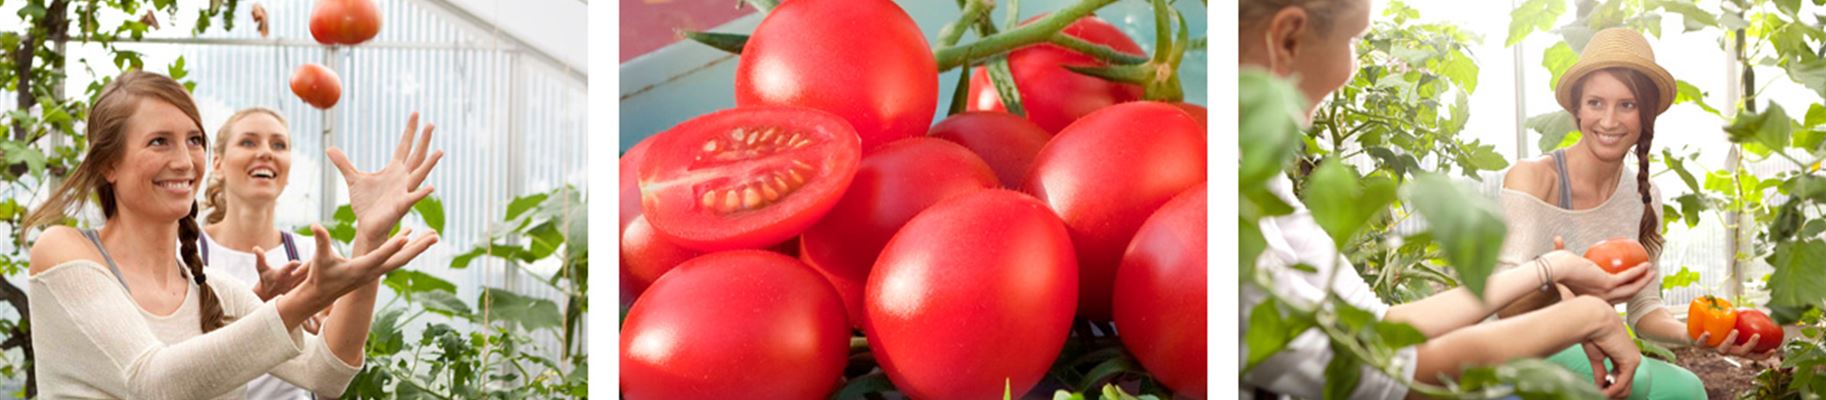 header_tomaten.jpg